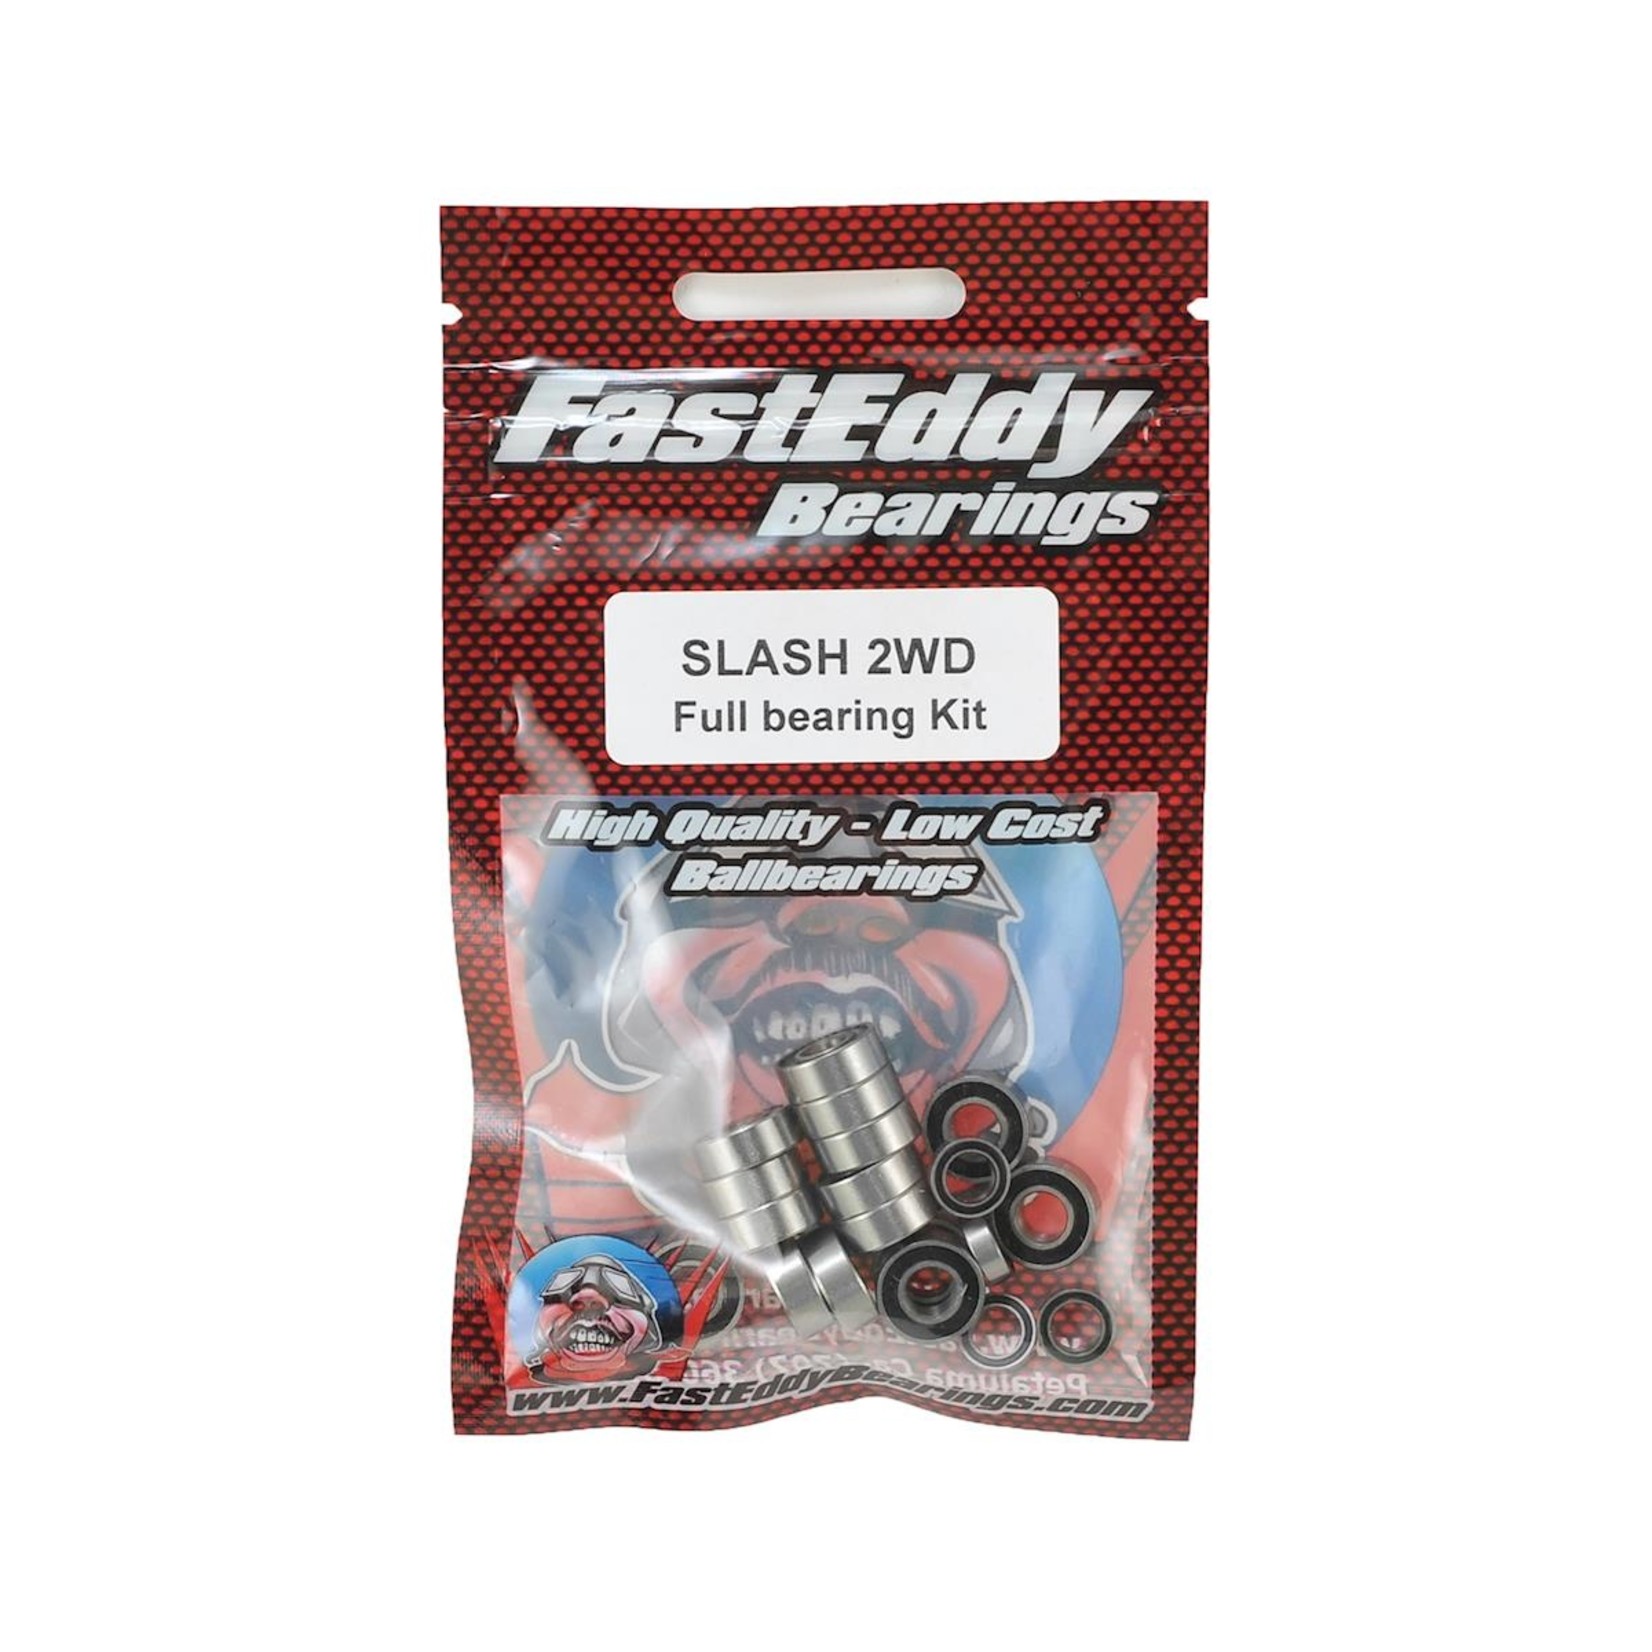 Fast Eddy Sealed Bearing Kit: Traxxas Slash 2WD